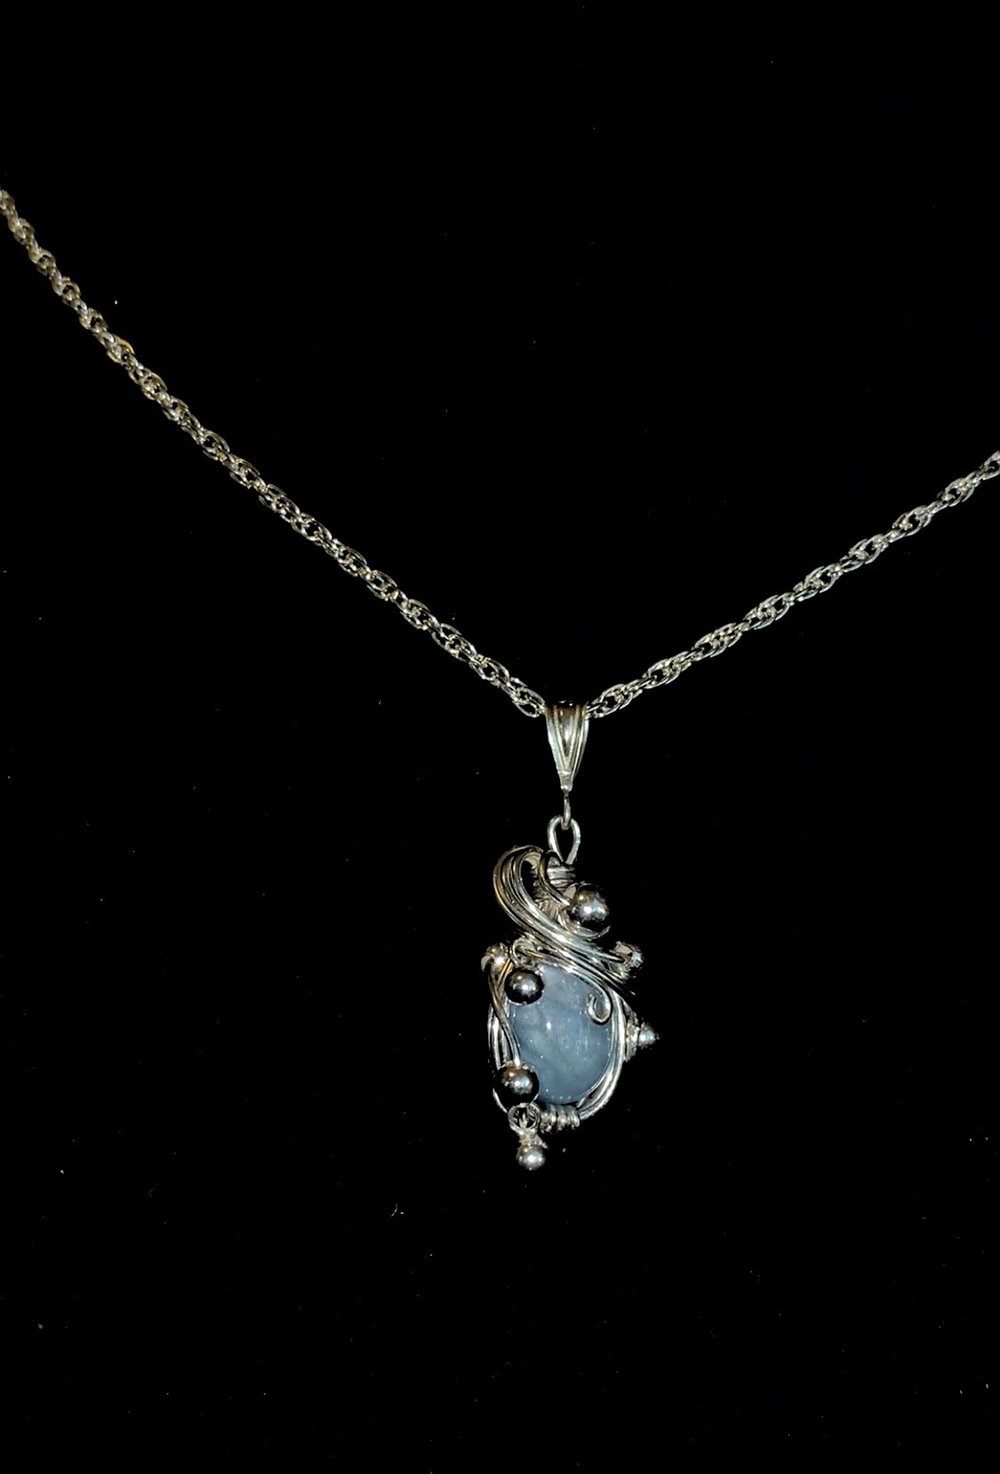 ⟢ Neptune necklace ⟣